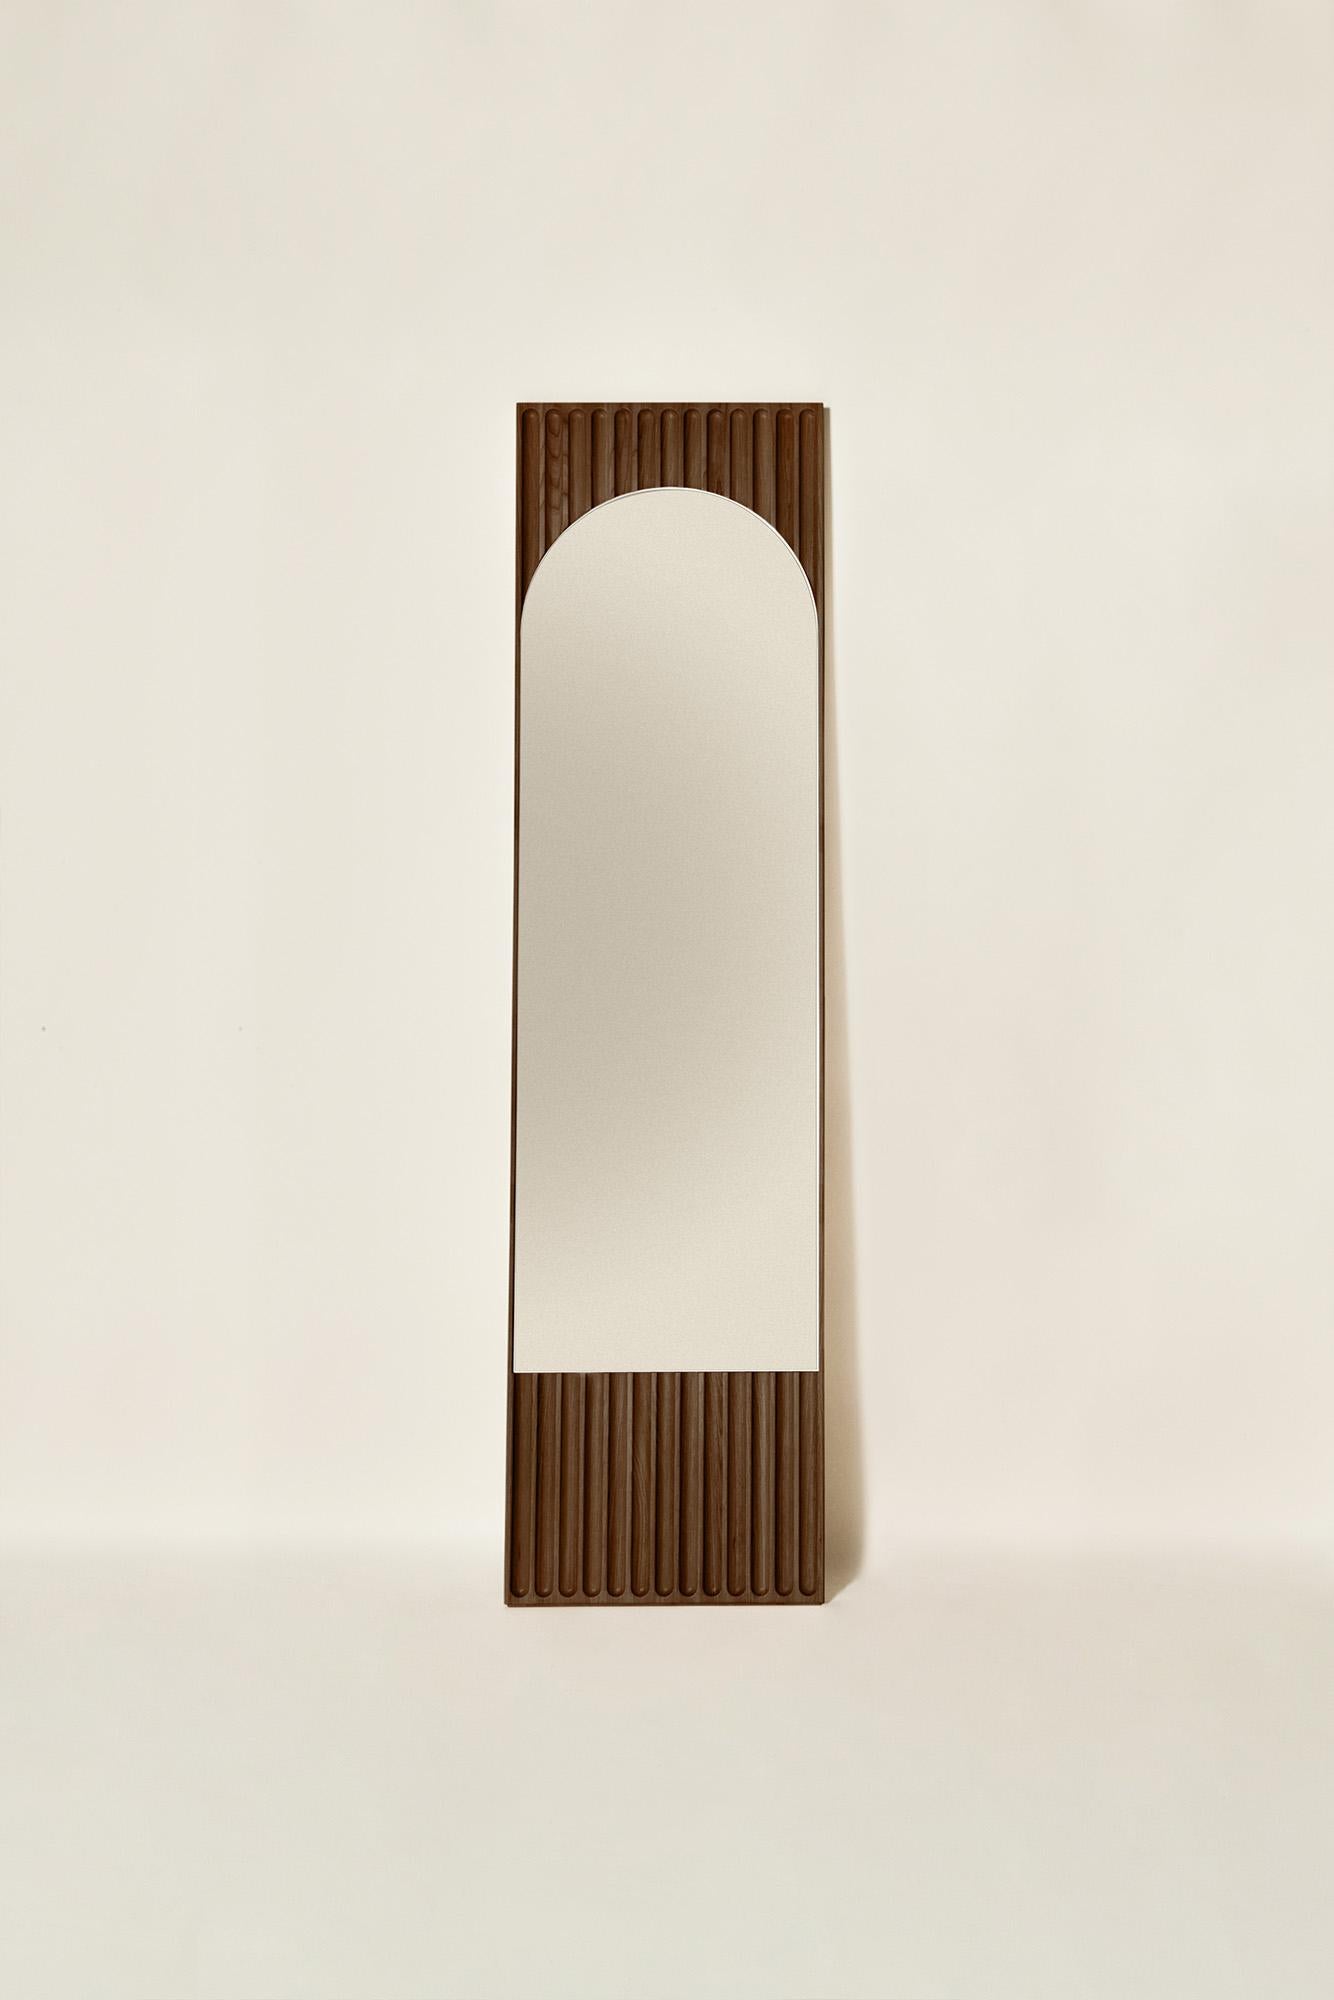 Tutto Sesto Solid Wood Rectangular Mirror, Ash in Black Finish, Contemporary For Sale 2